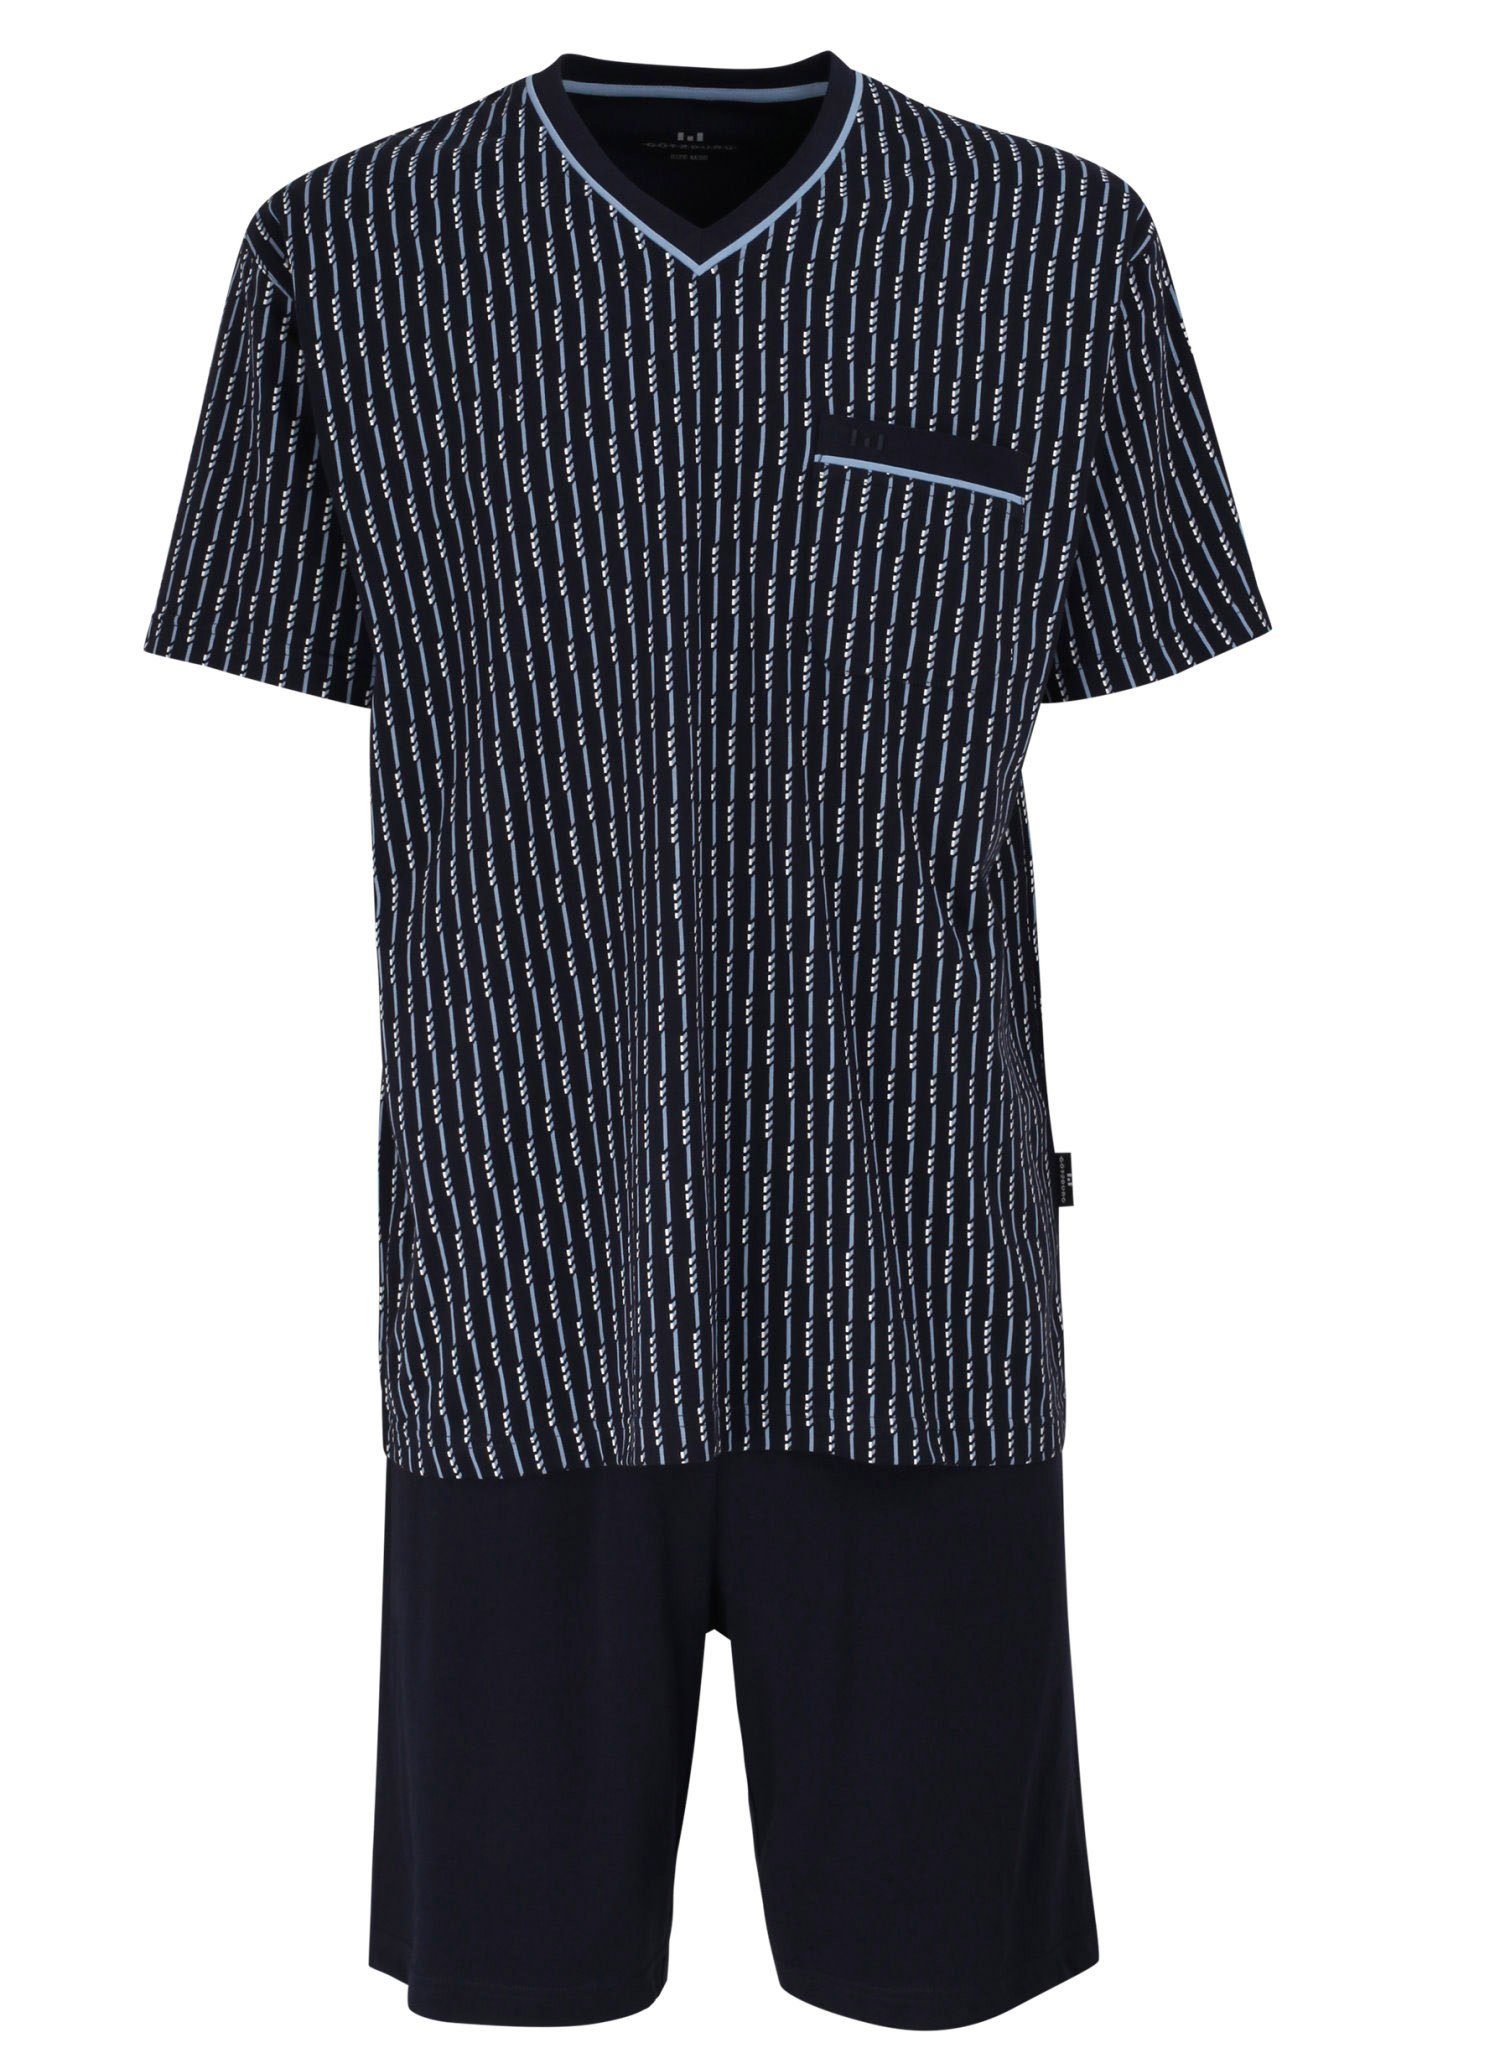 GÖTZBURG Pyjama Herren Schlafanzug Queens kurz Baumwolle blau-dunkel-Allover